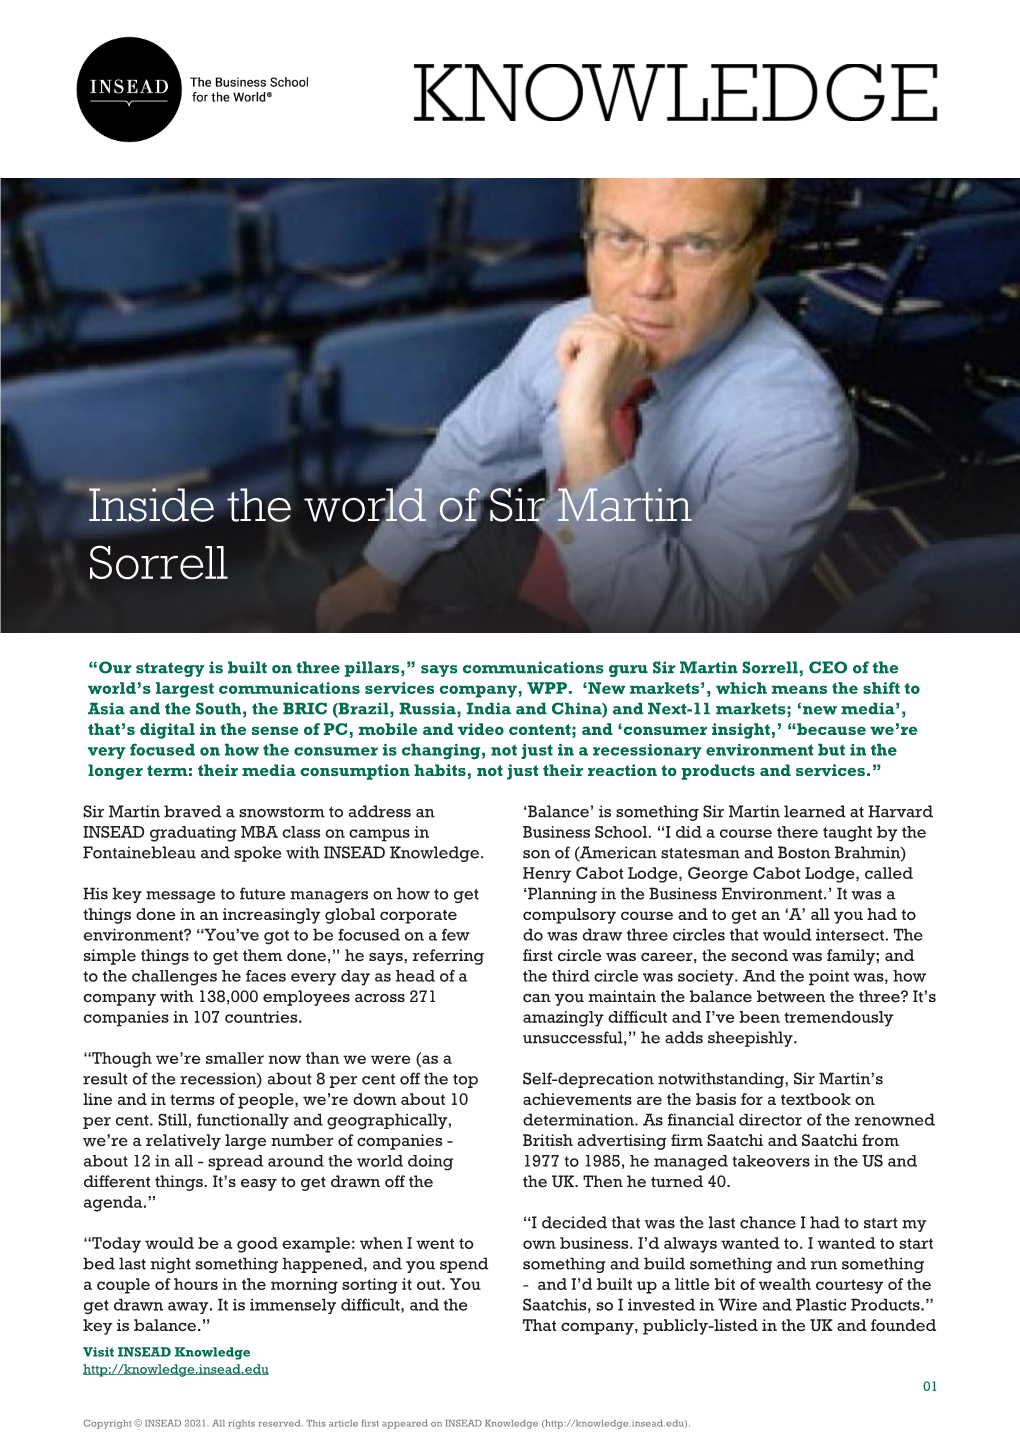 Inside the World of Sir Martin Sorrell